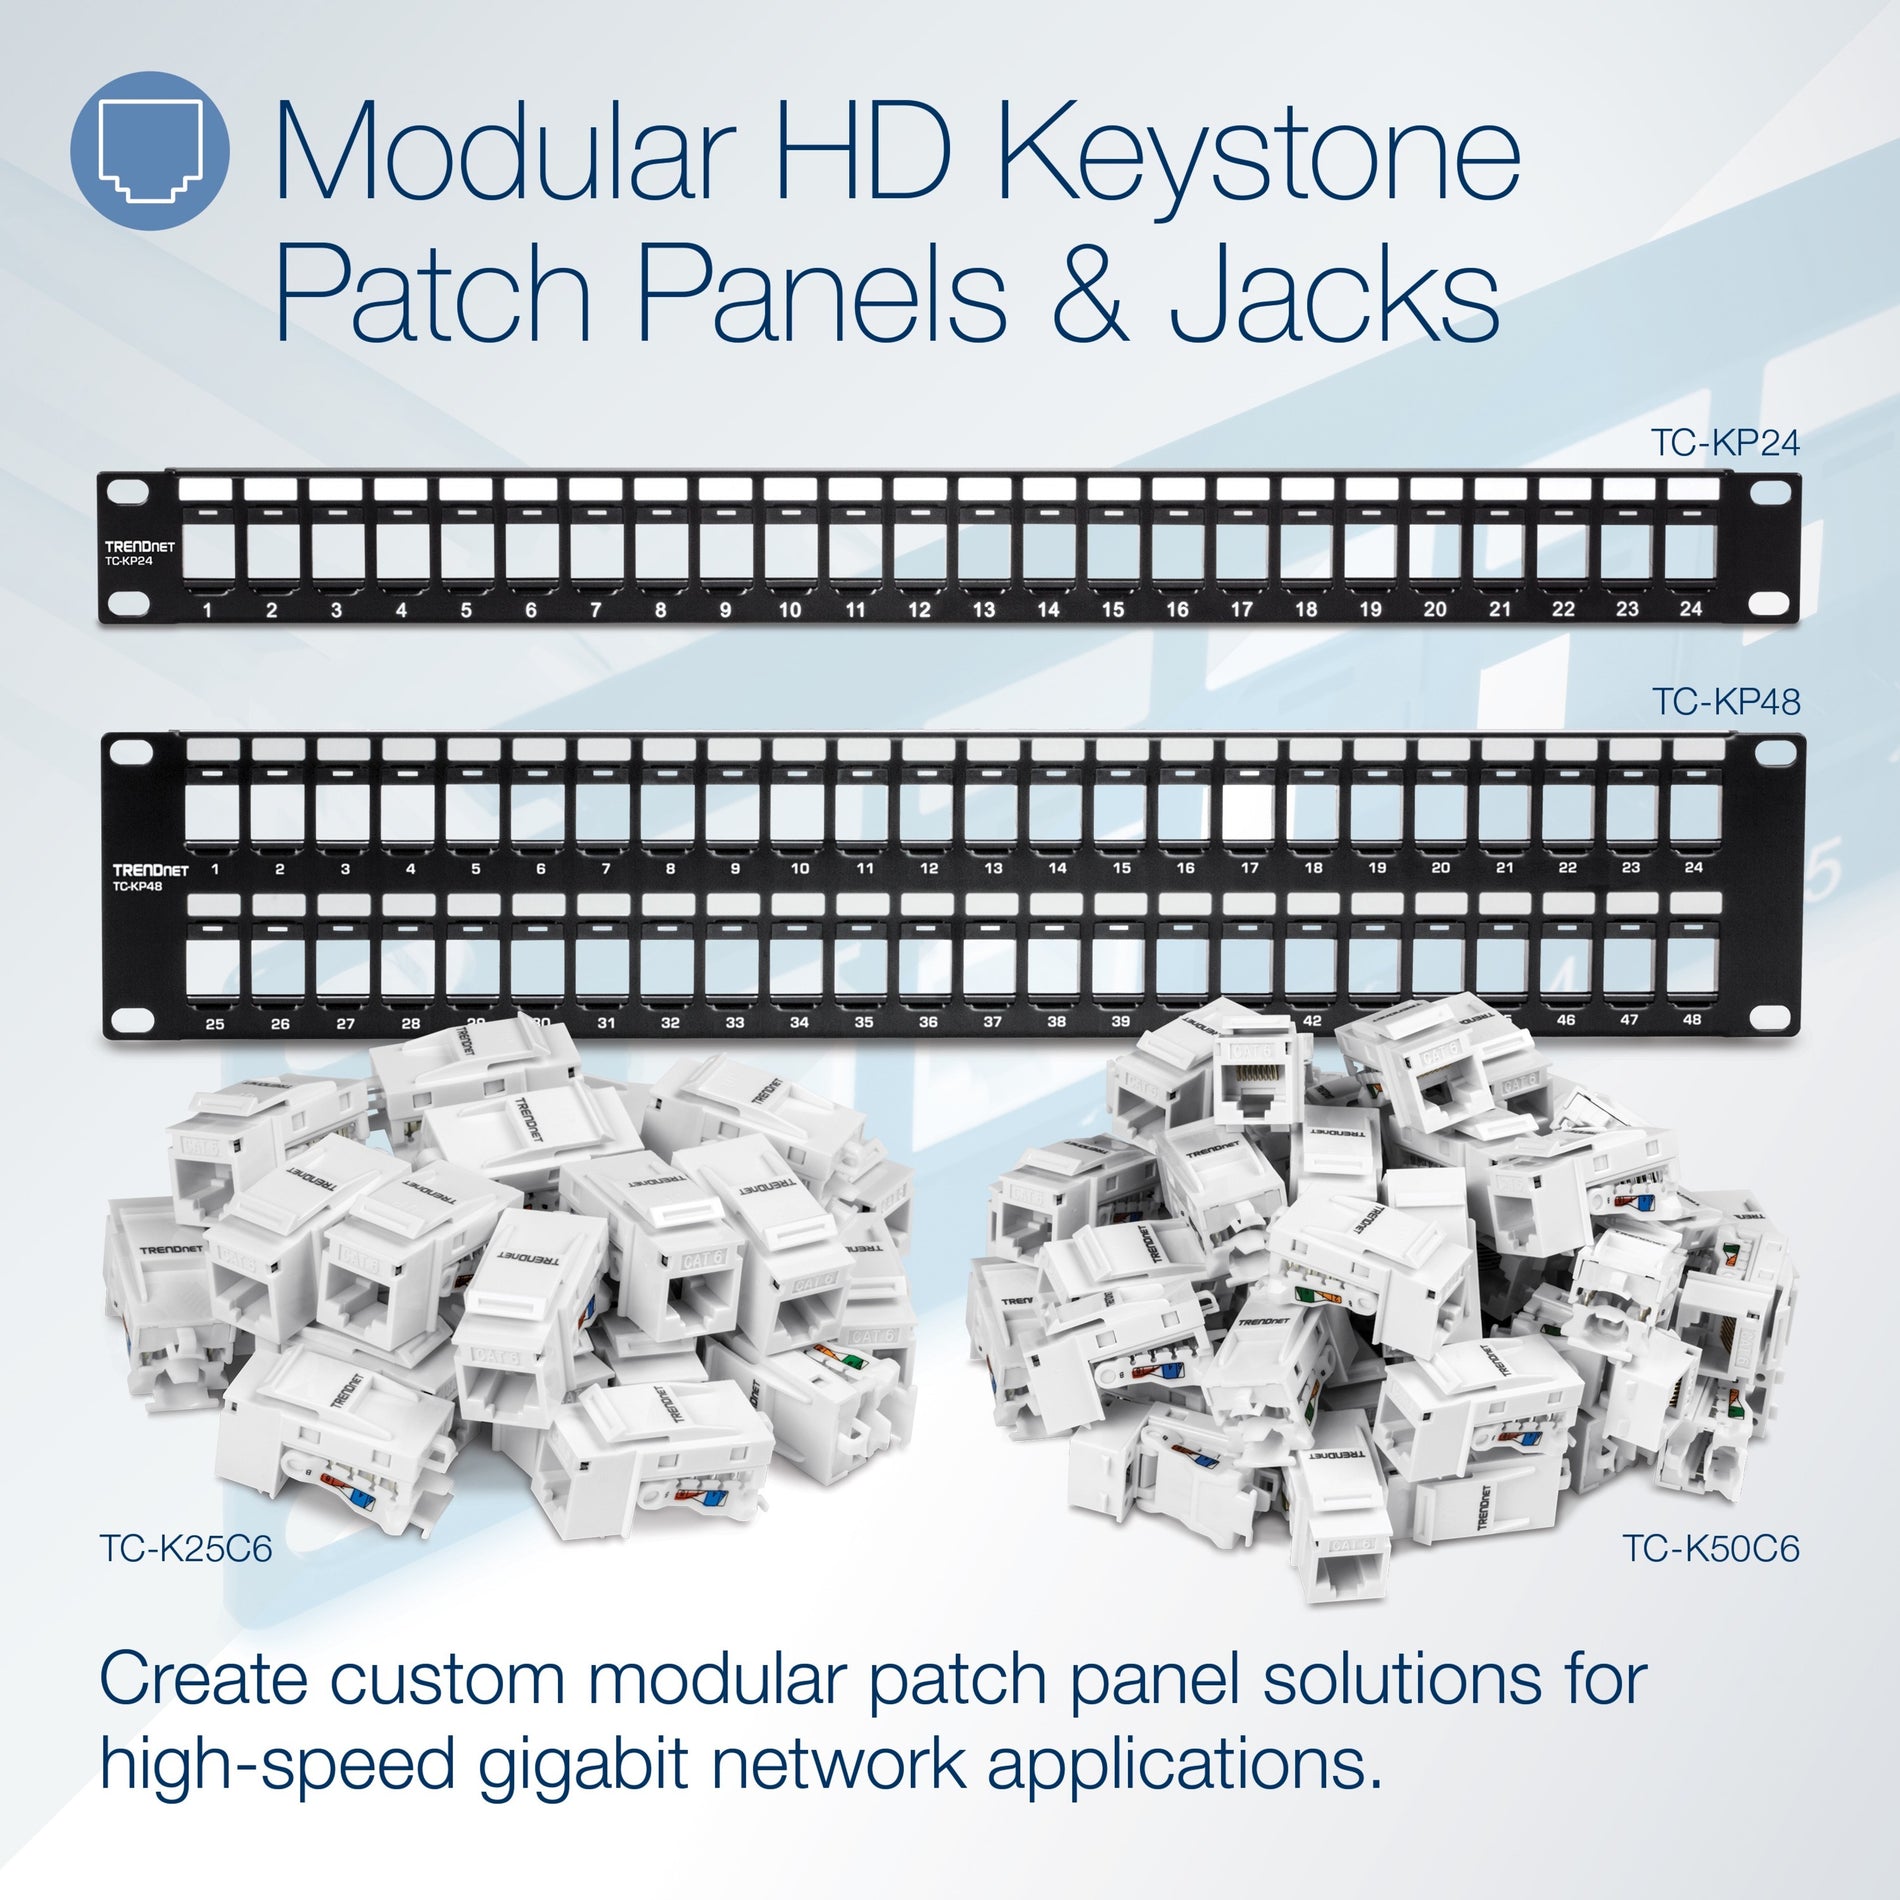 TRENDnet TC-KP48 48-Port Blank Keystone Patch Panel, 2U Rackmount Housing, HD Keystone Network Patch Panel, Recommended With TC-K25C6 & TC-K50C6 Cat6 Keystone Jacks (Sold Separately), Black